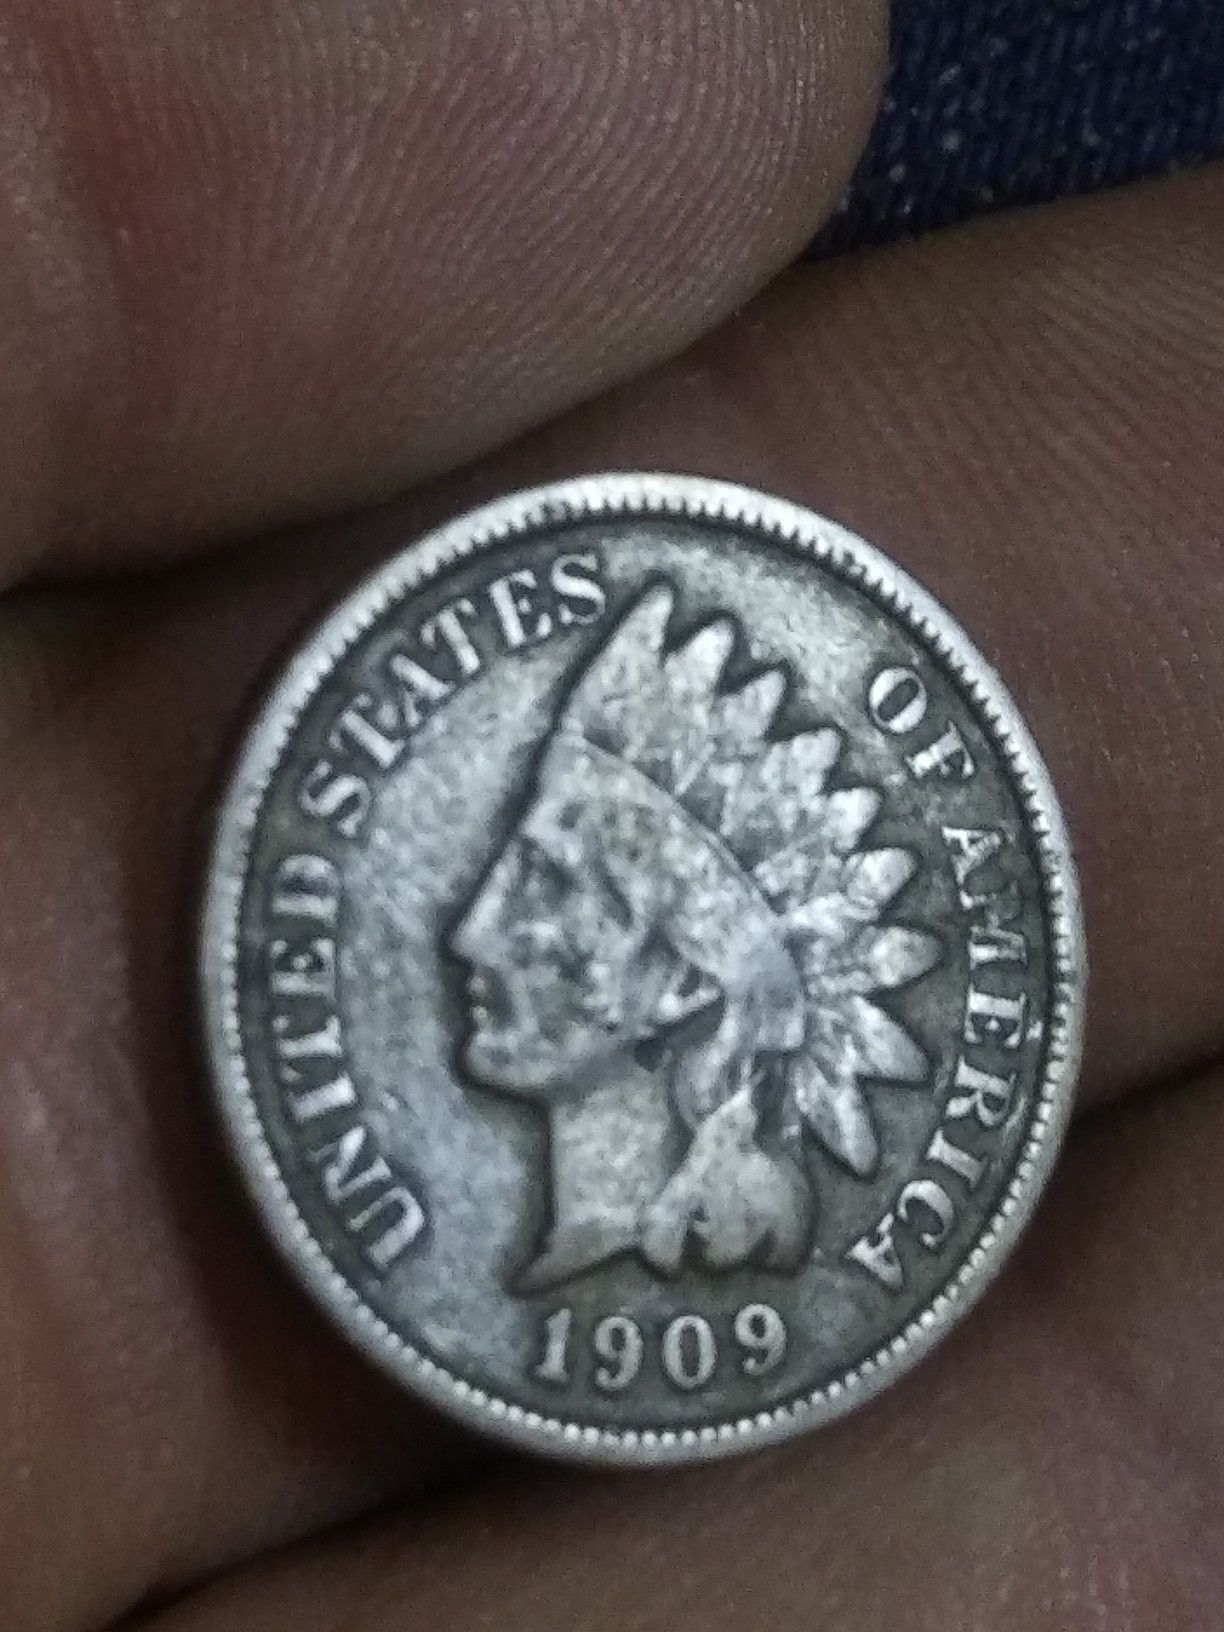 Last year of Indian head penny seldom seen